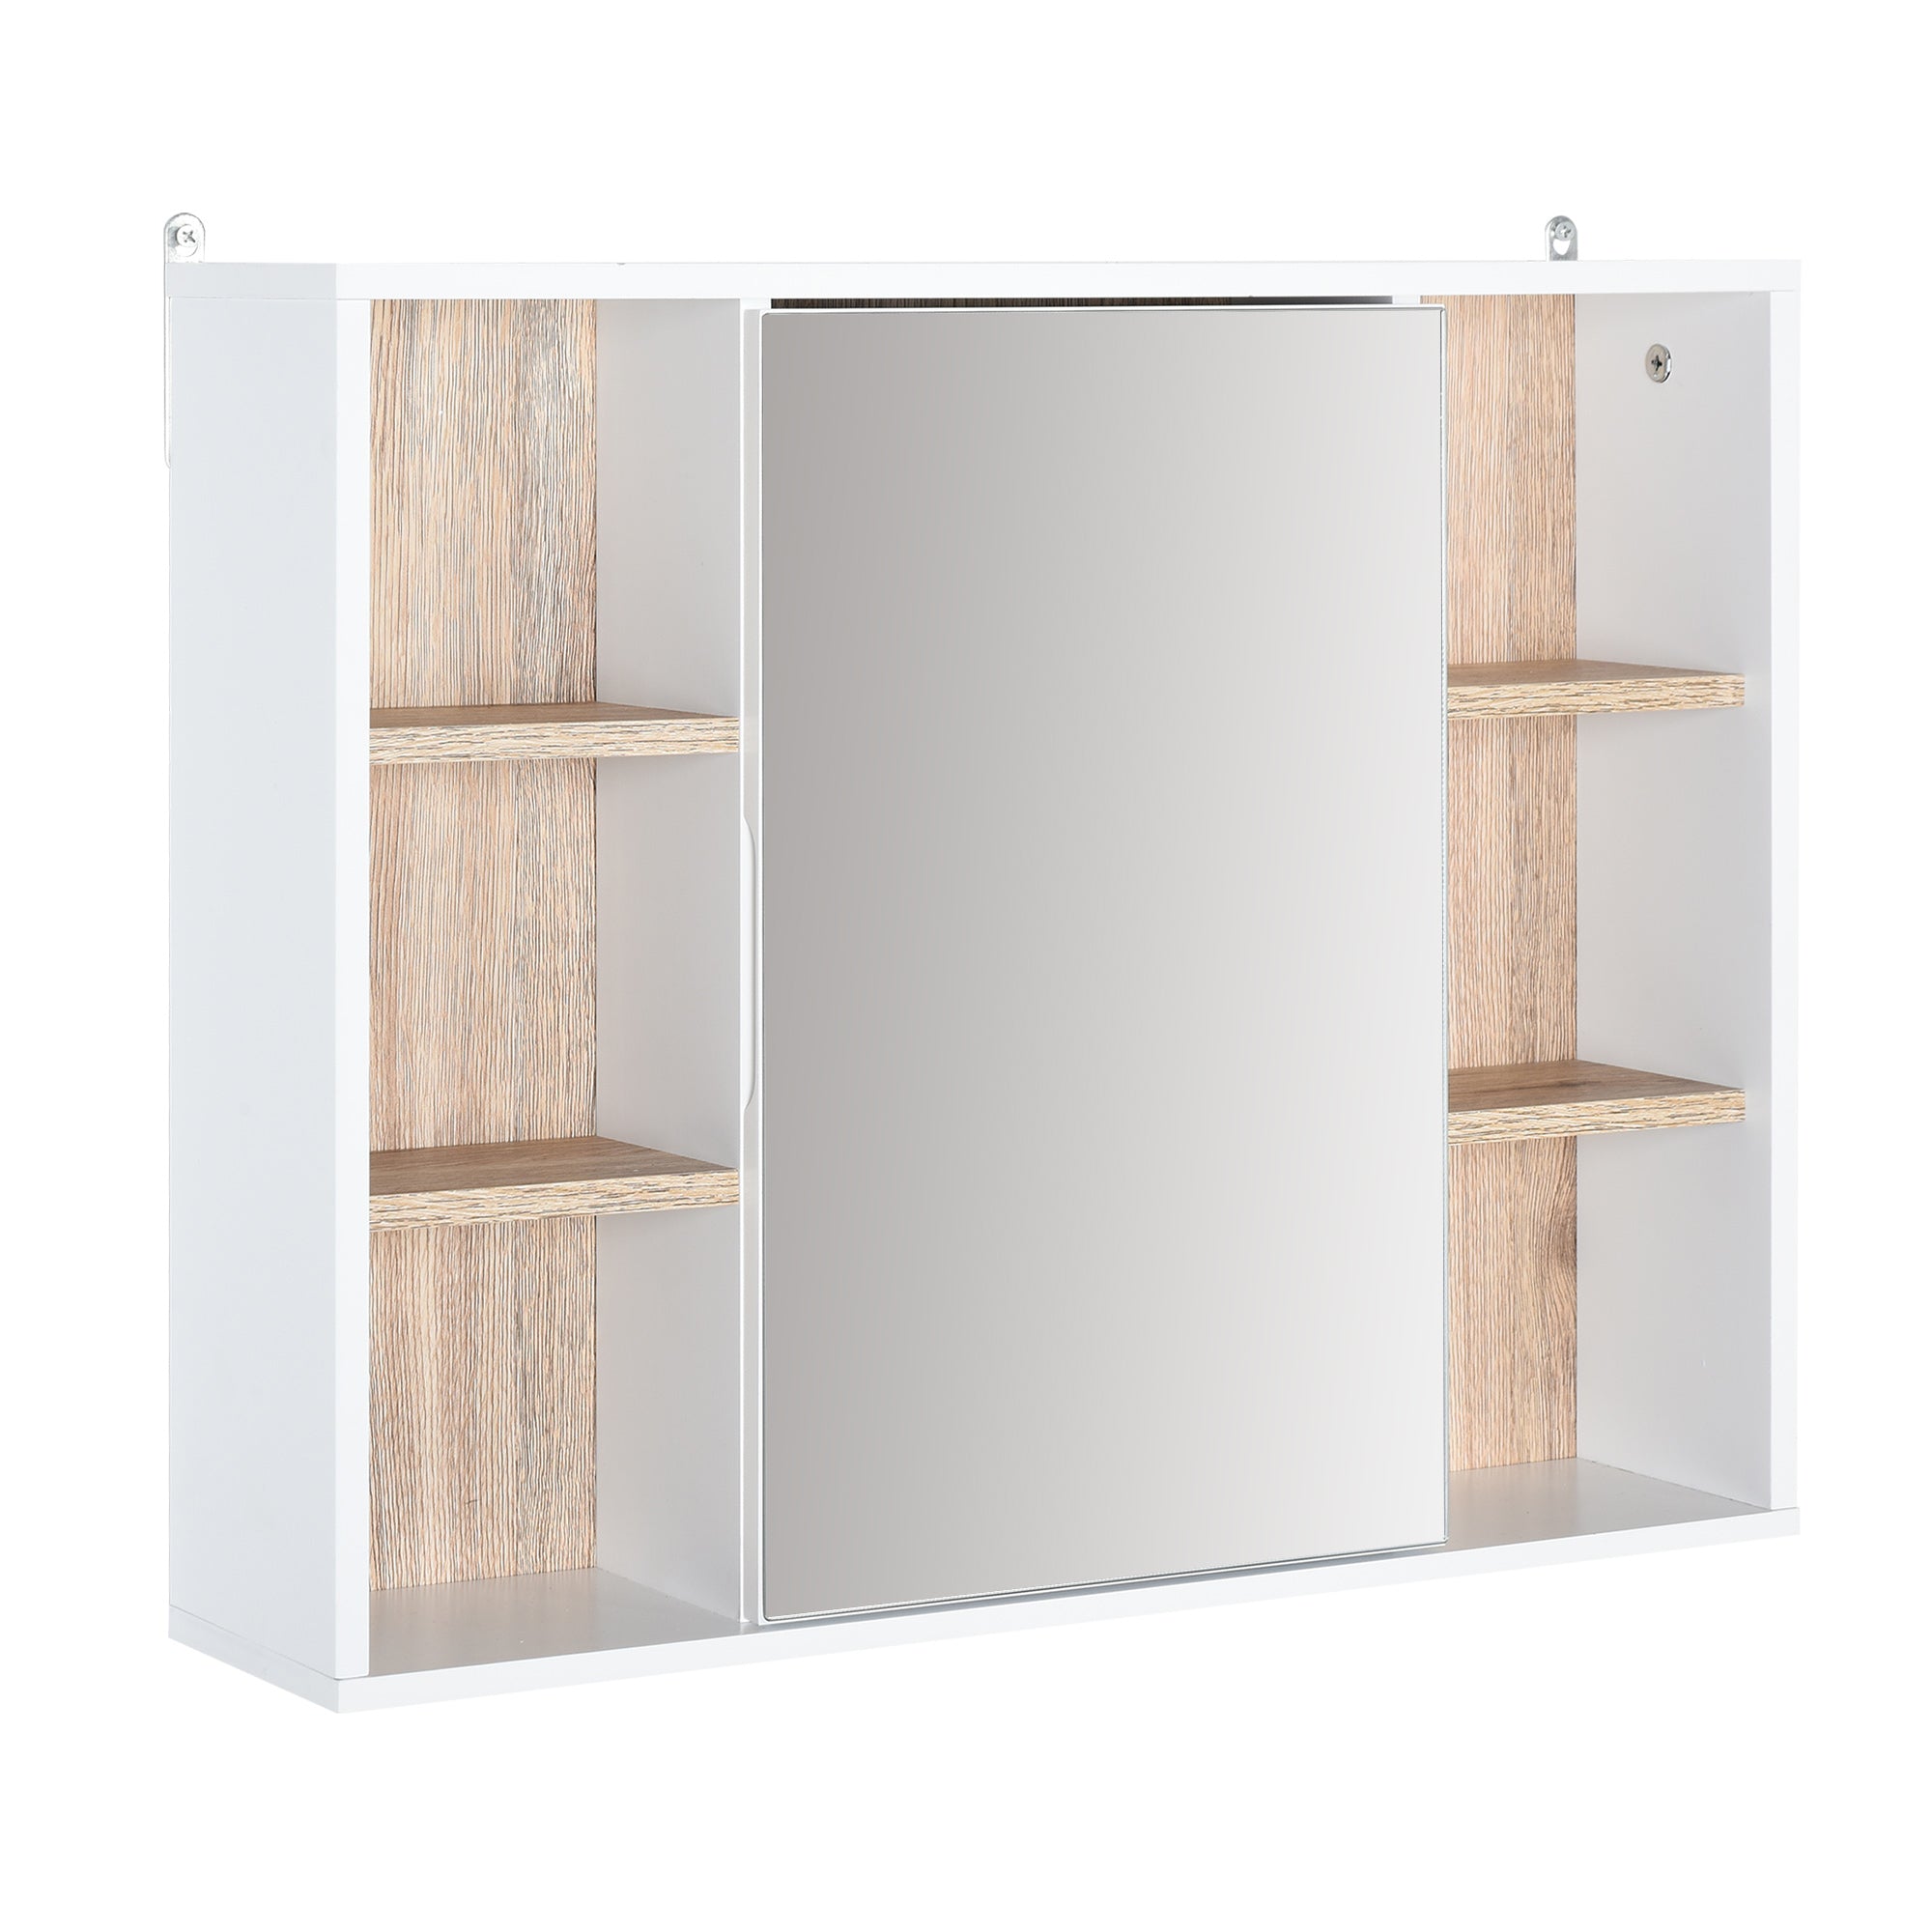 HOMCOM Wall Mounted Bathroom Storage Cabinet w/ Mirrored Door - Adjustable Shelf  | TJ Hughes